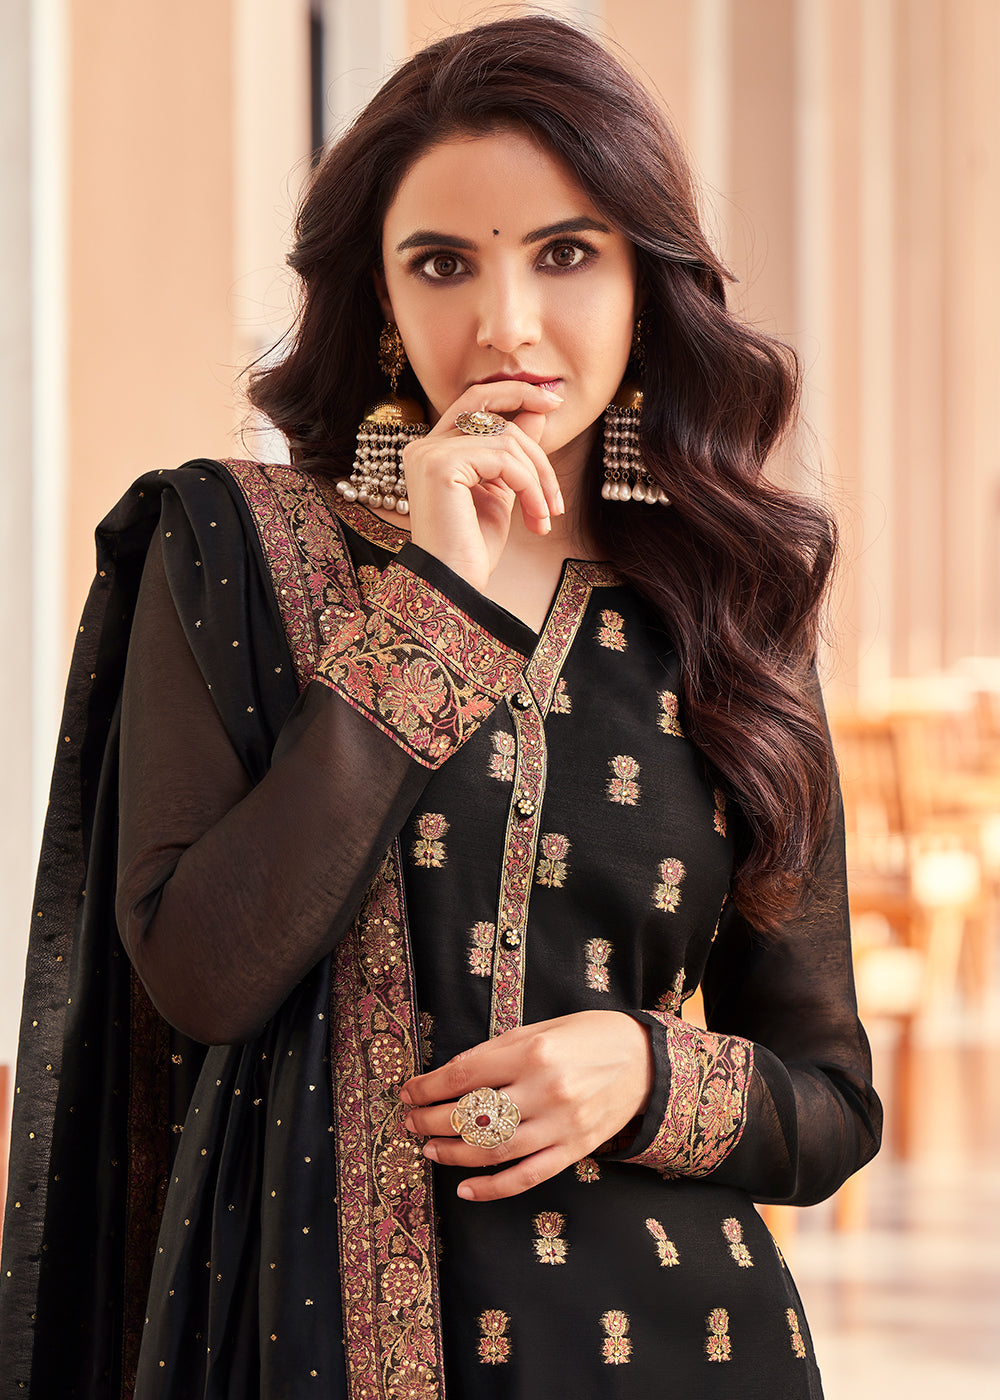 Buy Now Black Jacquard Embordered Festive Pant Salwar Suit Online in USA, UK, Canada & Worldwide at Empress Clothing.